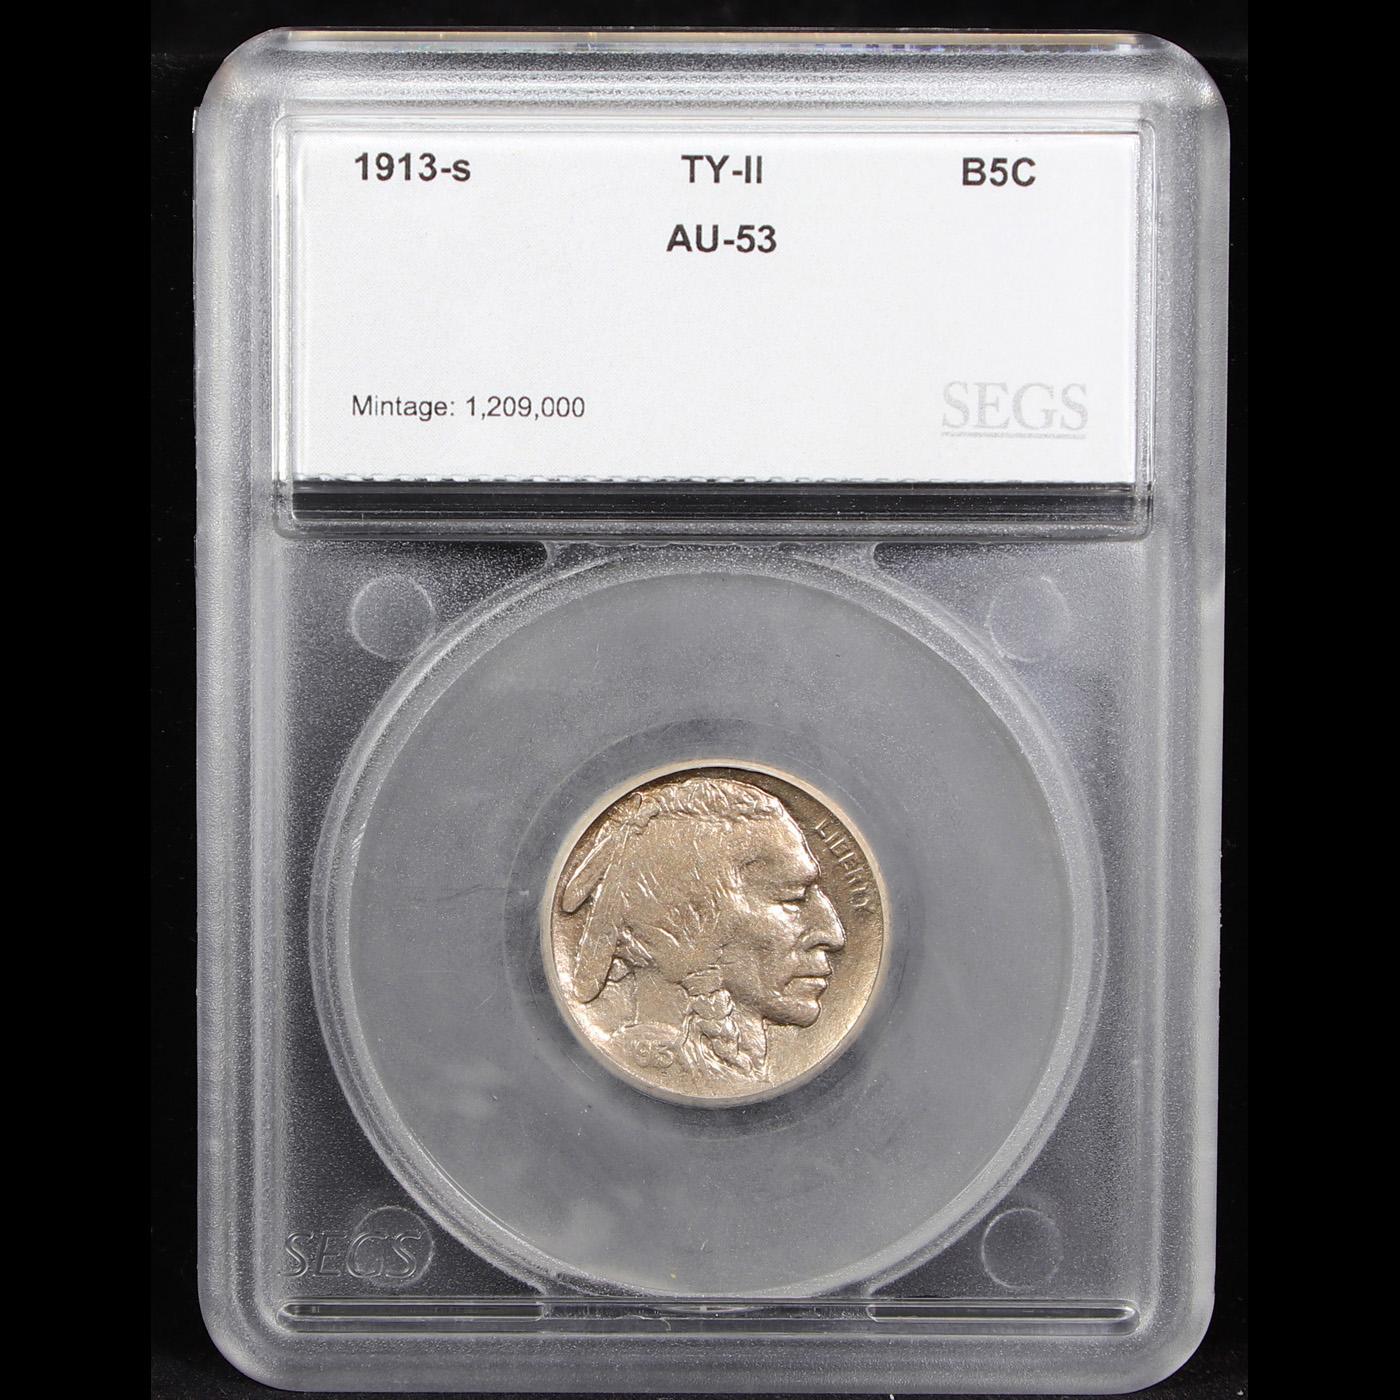 ***Auction Highlight*** 1913-s Ty II Buffalo Nickel 5c Graded au53 By SEGS (fc)